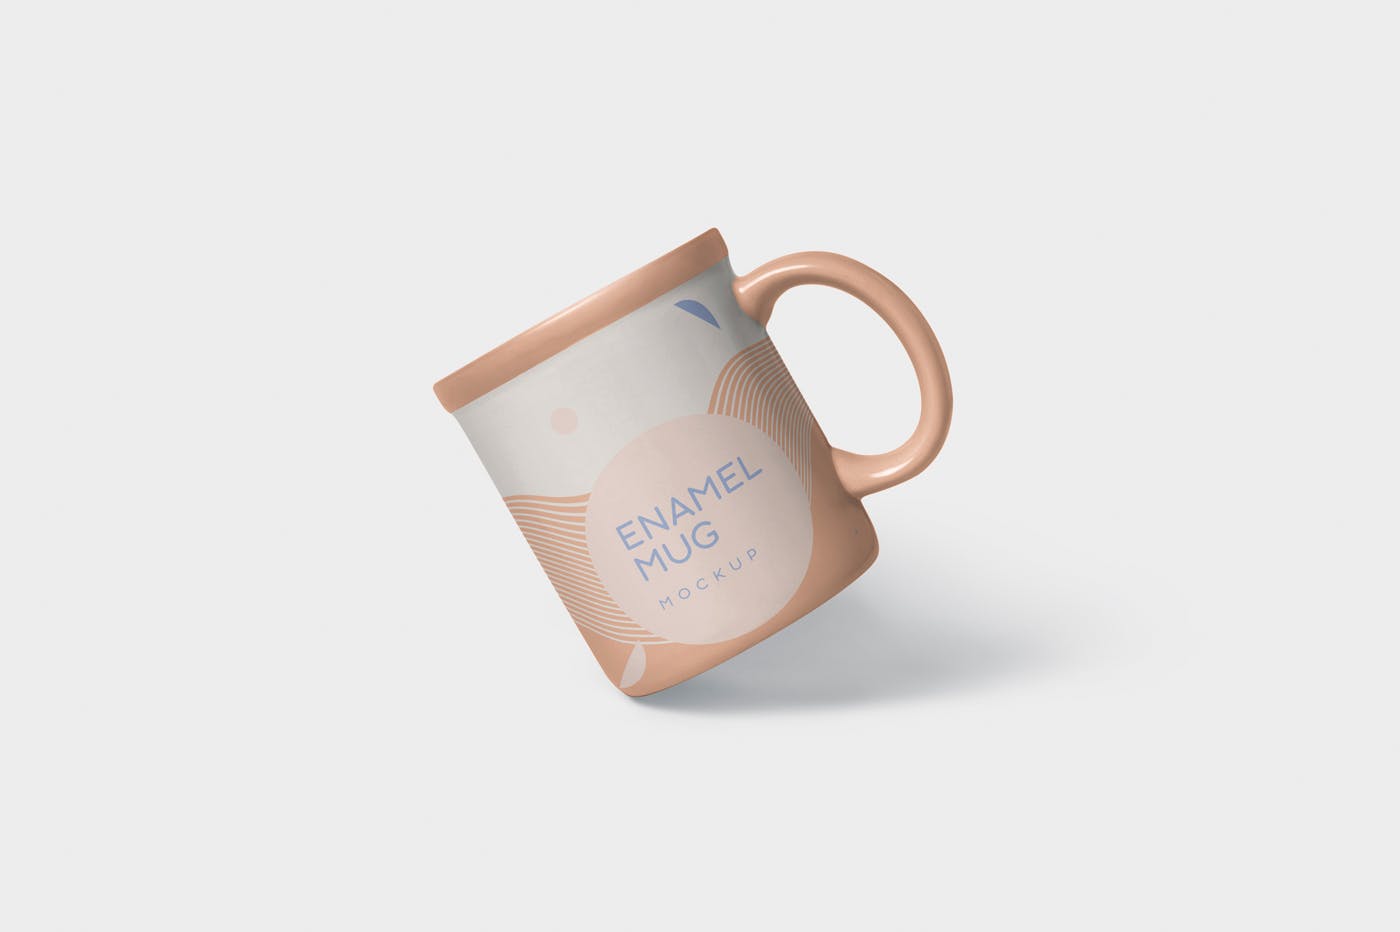 带把手圆形搪瓷杯马克杯图案设计第一素材精选 Round Enamel Mug Mockup With Handle插图(3)